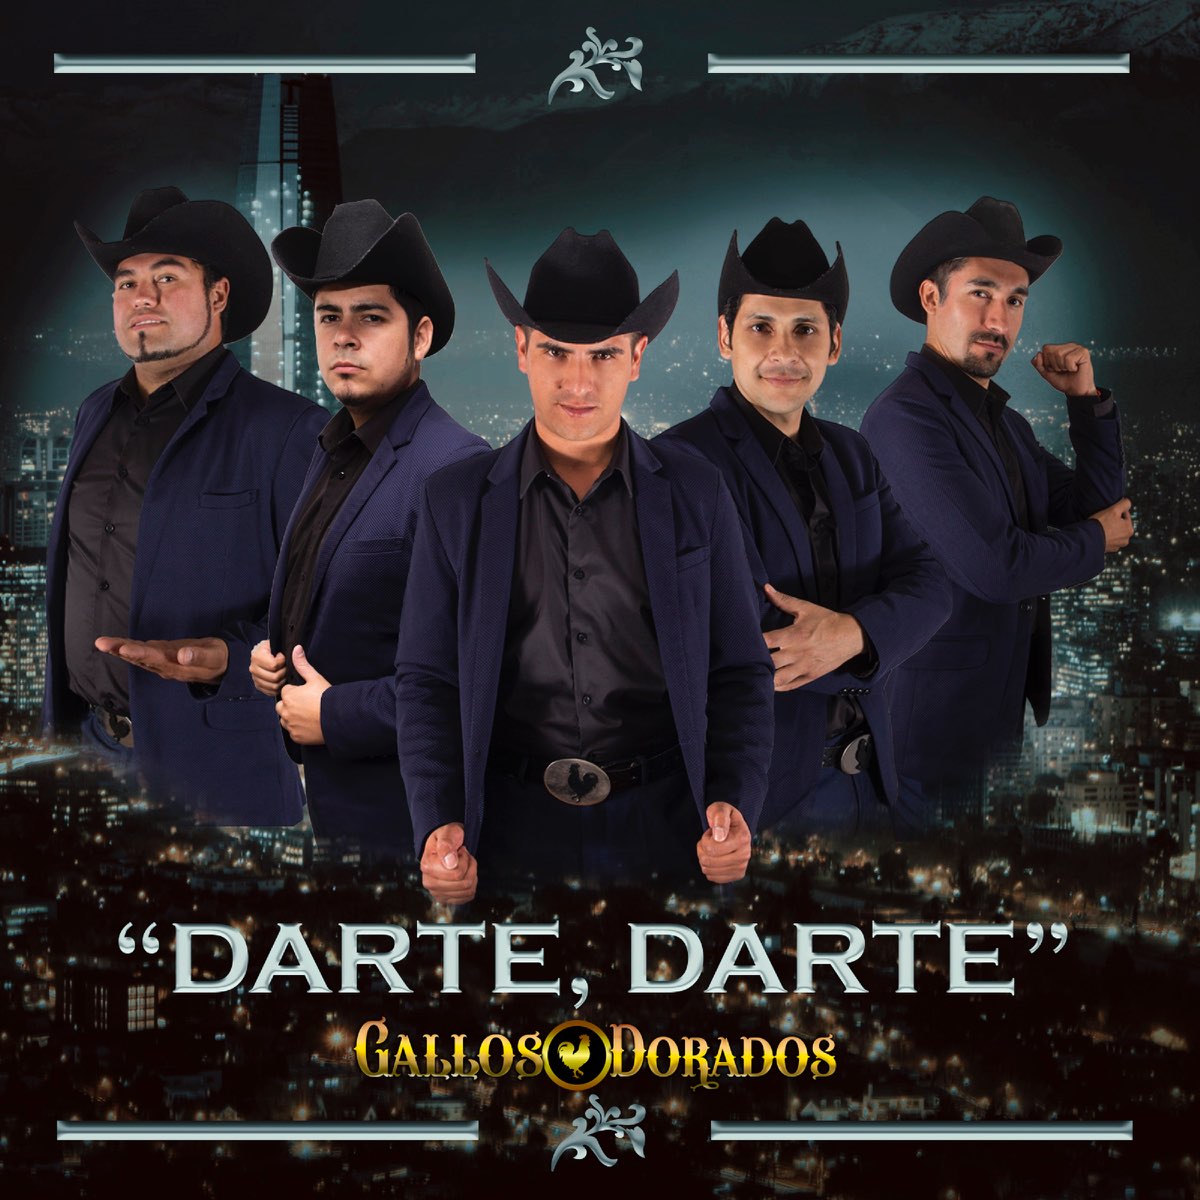 Darte Darte - Single de Gallos Dorados en Apple Music